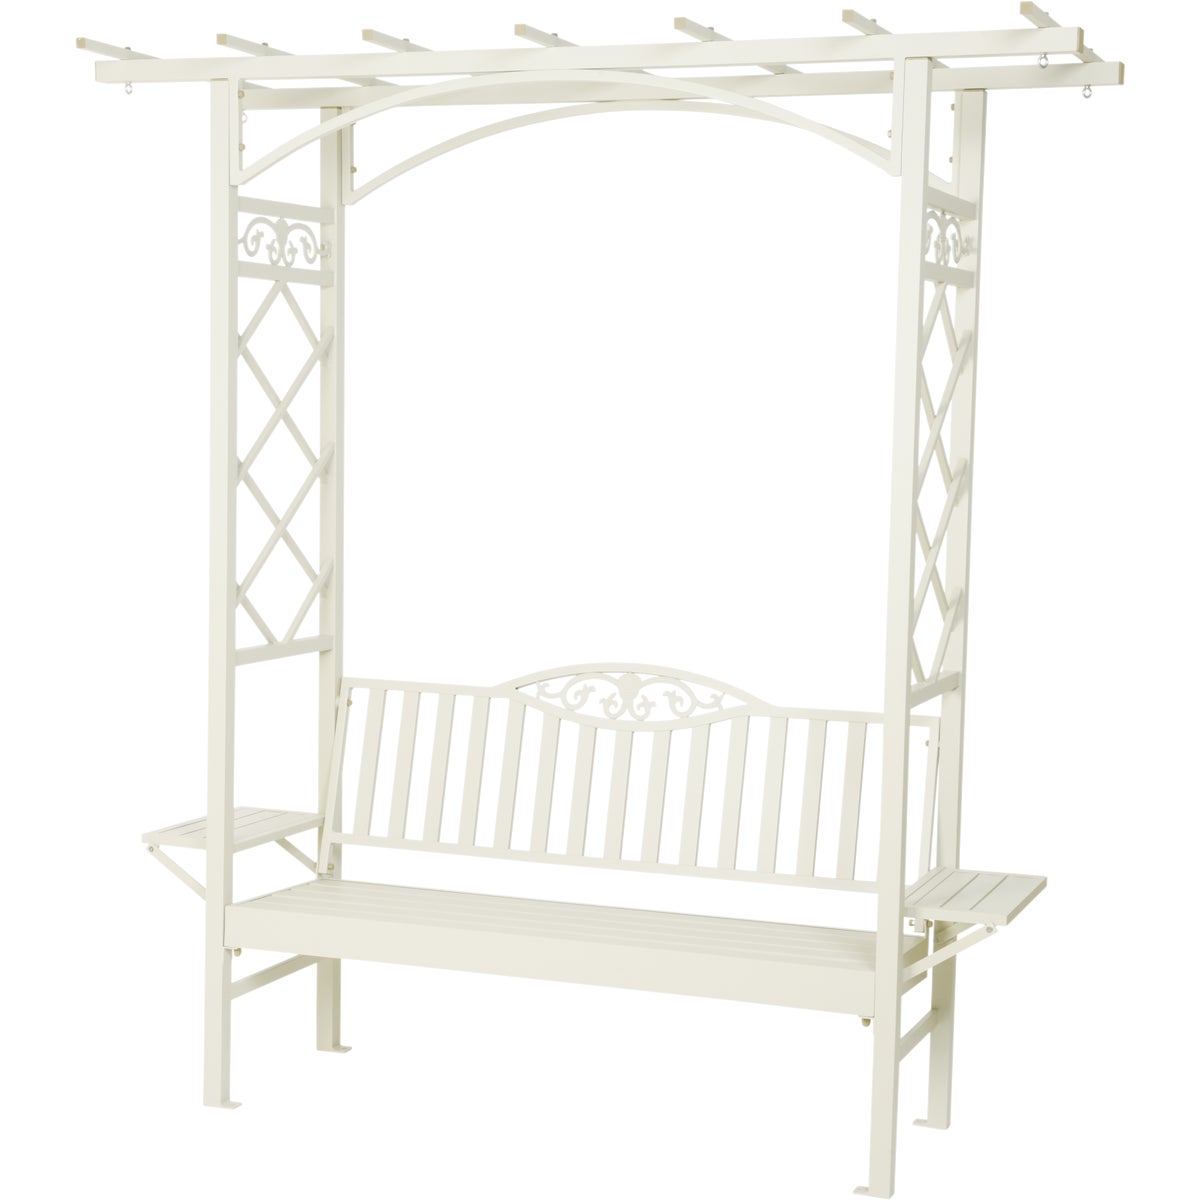 Decoris Garden Furniture Barolo 6 Ft. L. White Aluminum Bench with Folding Side Tables